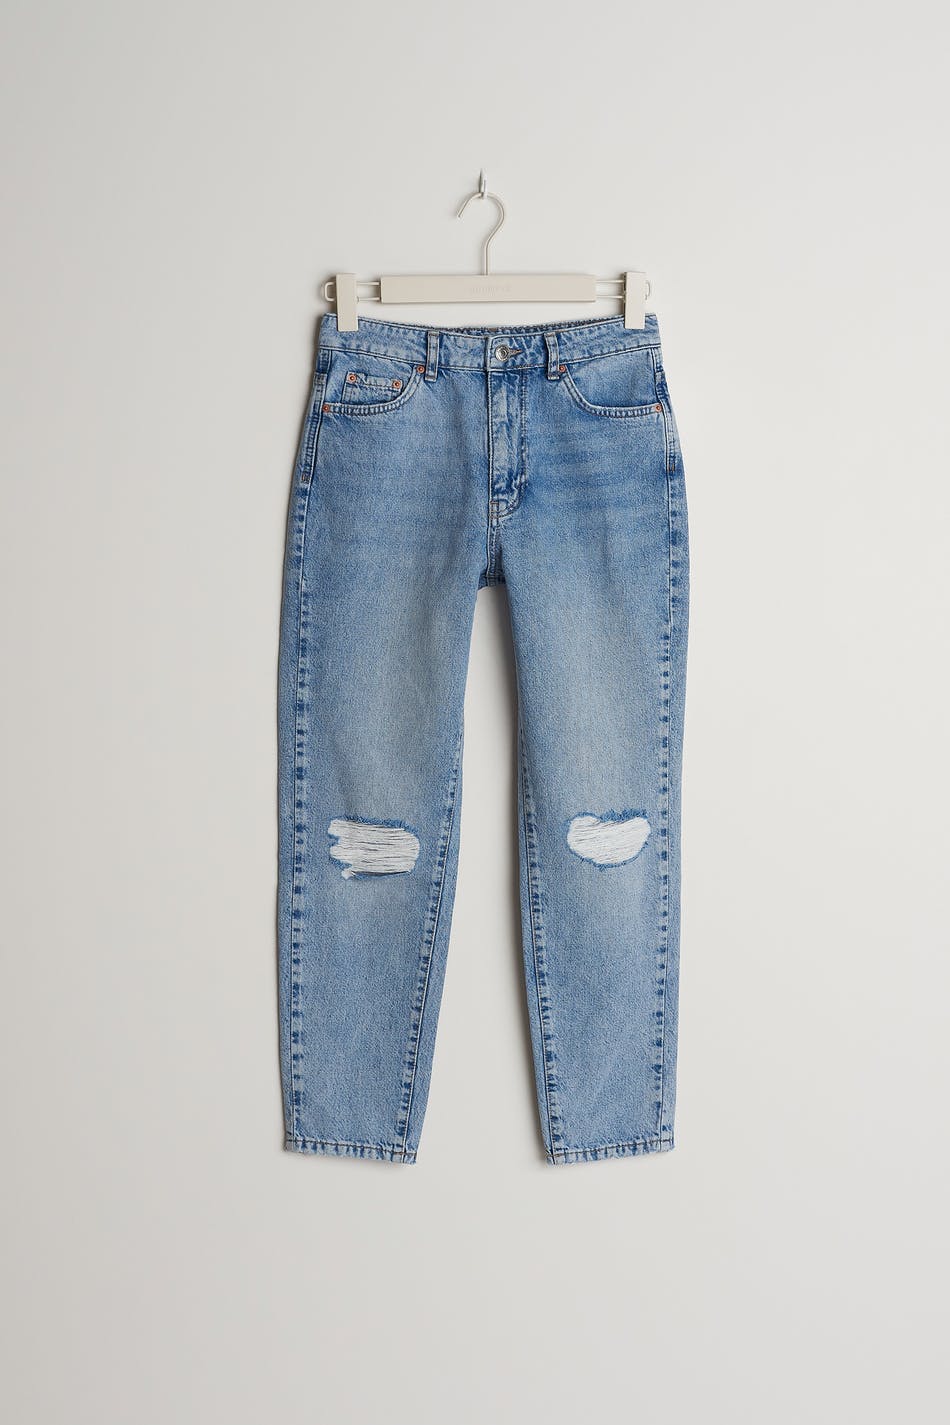 Gina Tricot Dagny PETITE jeans 36  Sea blue dest (5114)